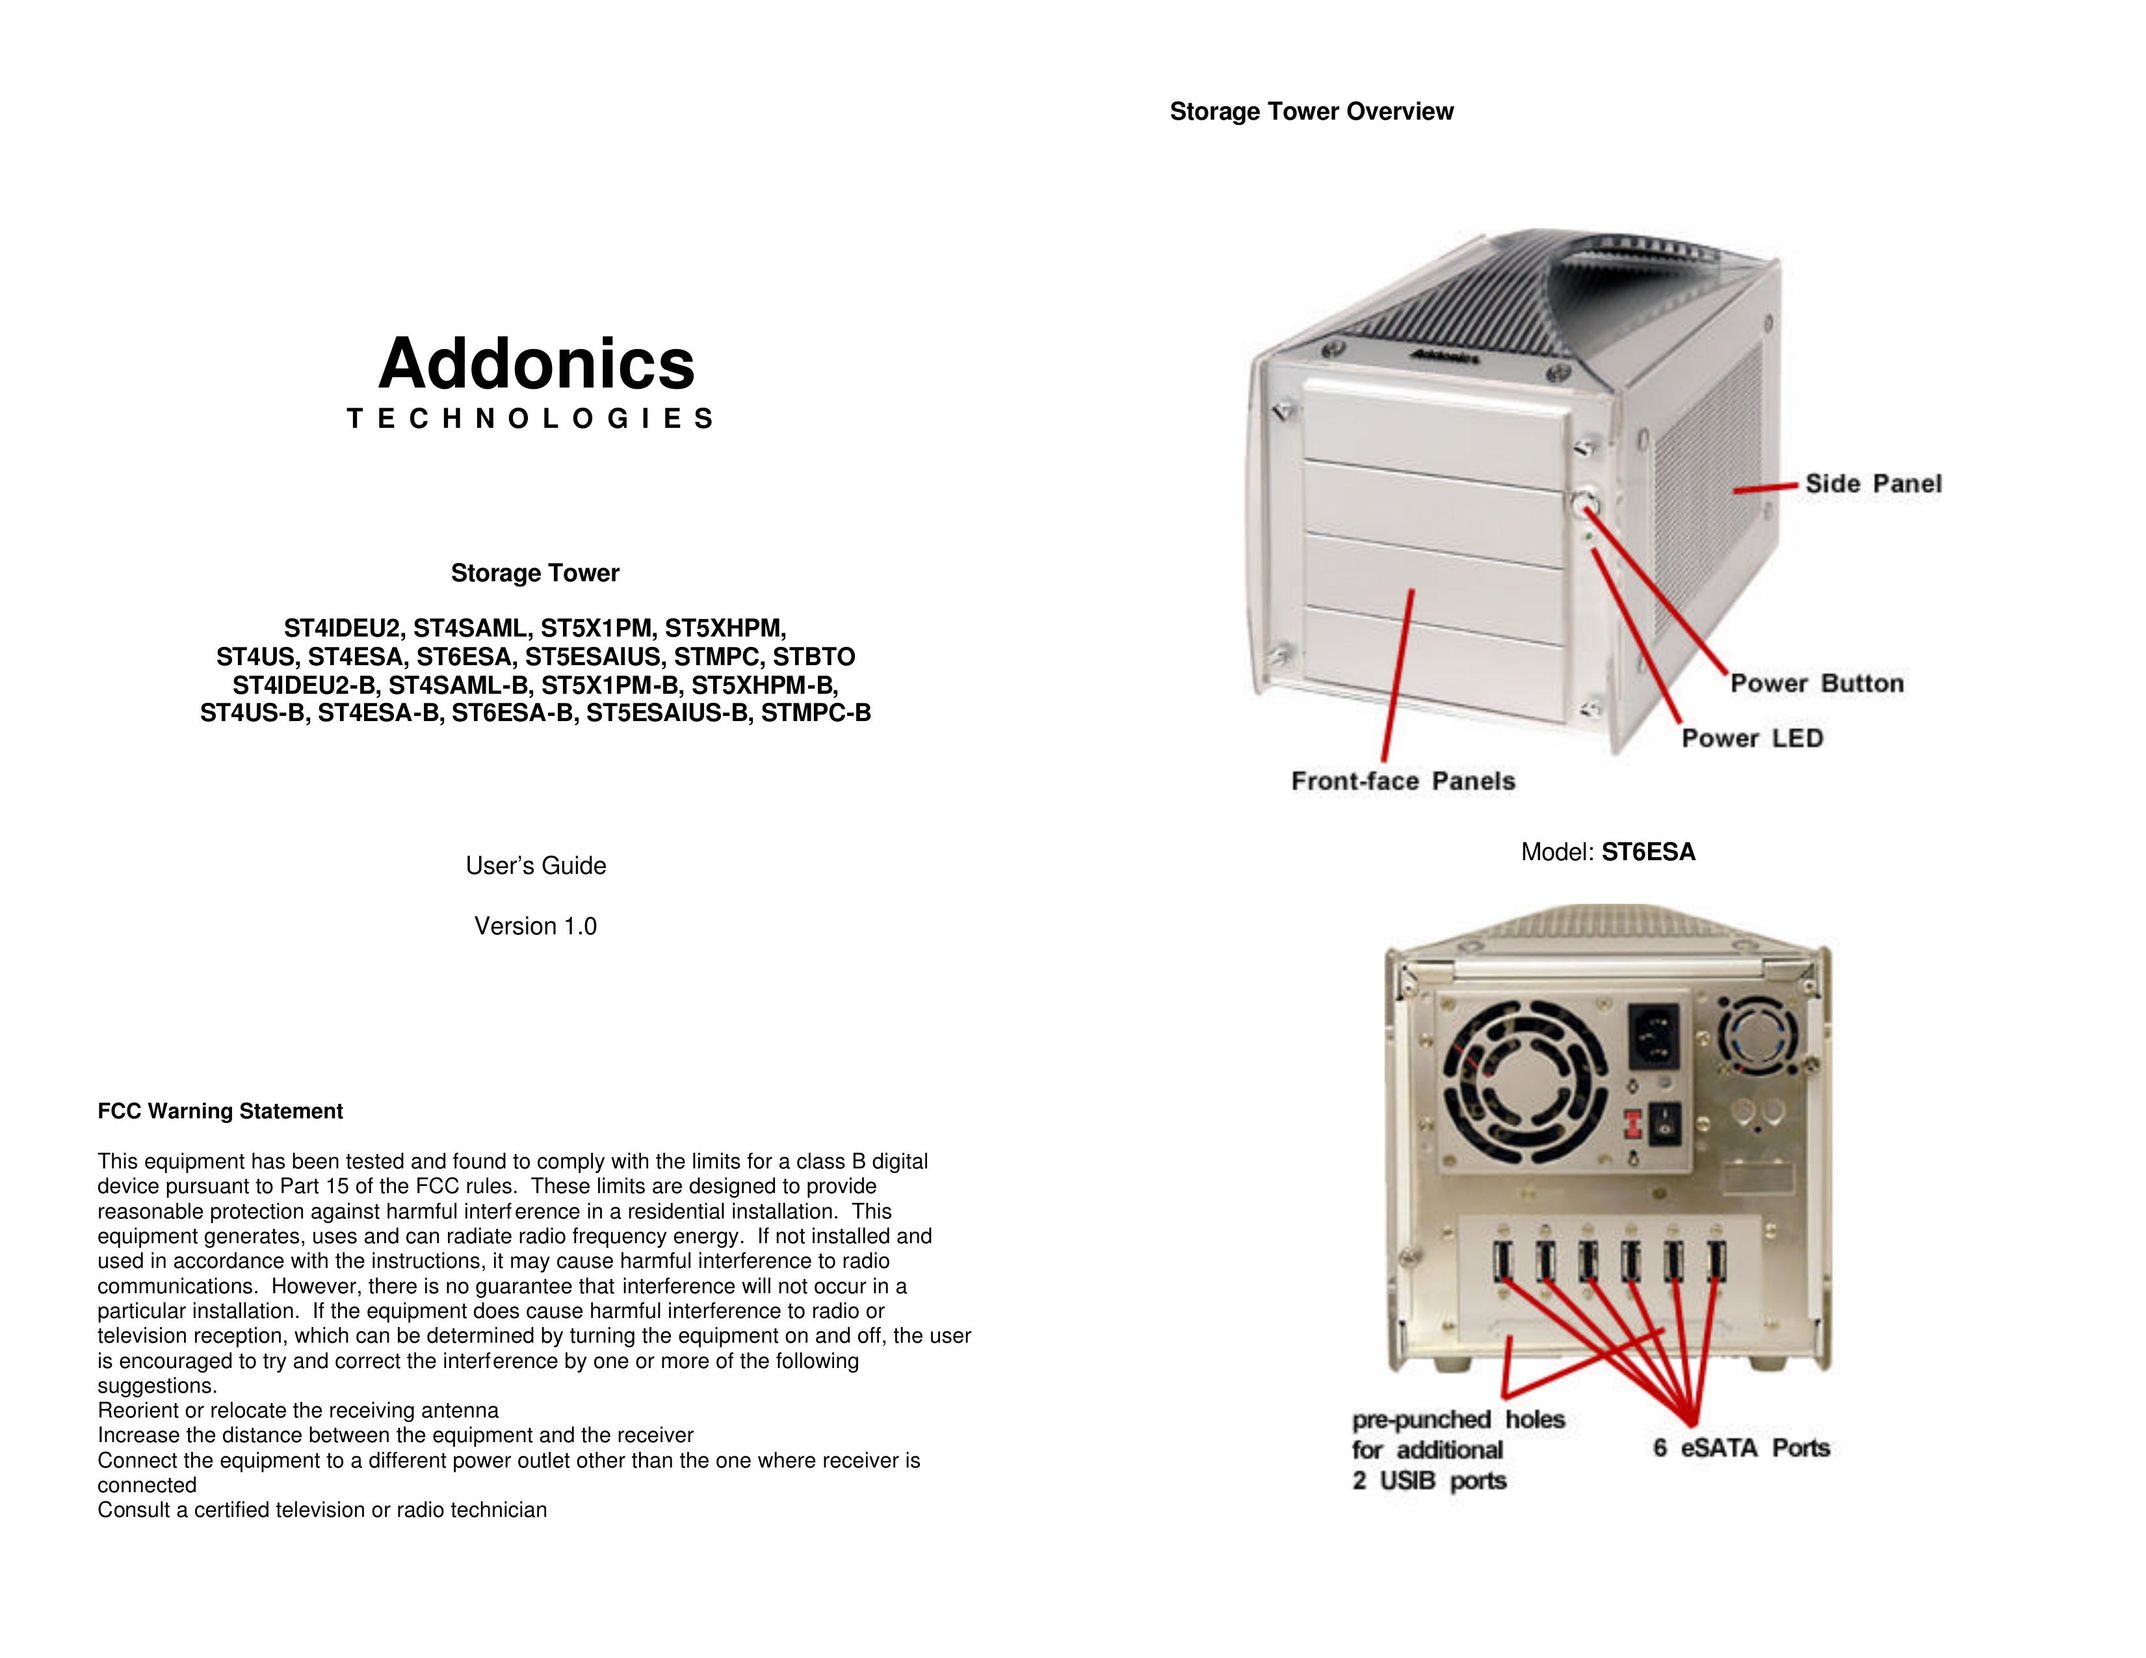 Addonics Technologies ST5X1PM-B Portable Media Storage User Manual